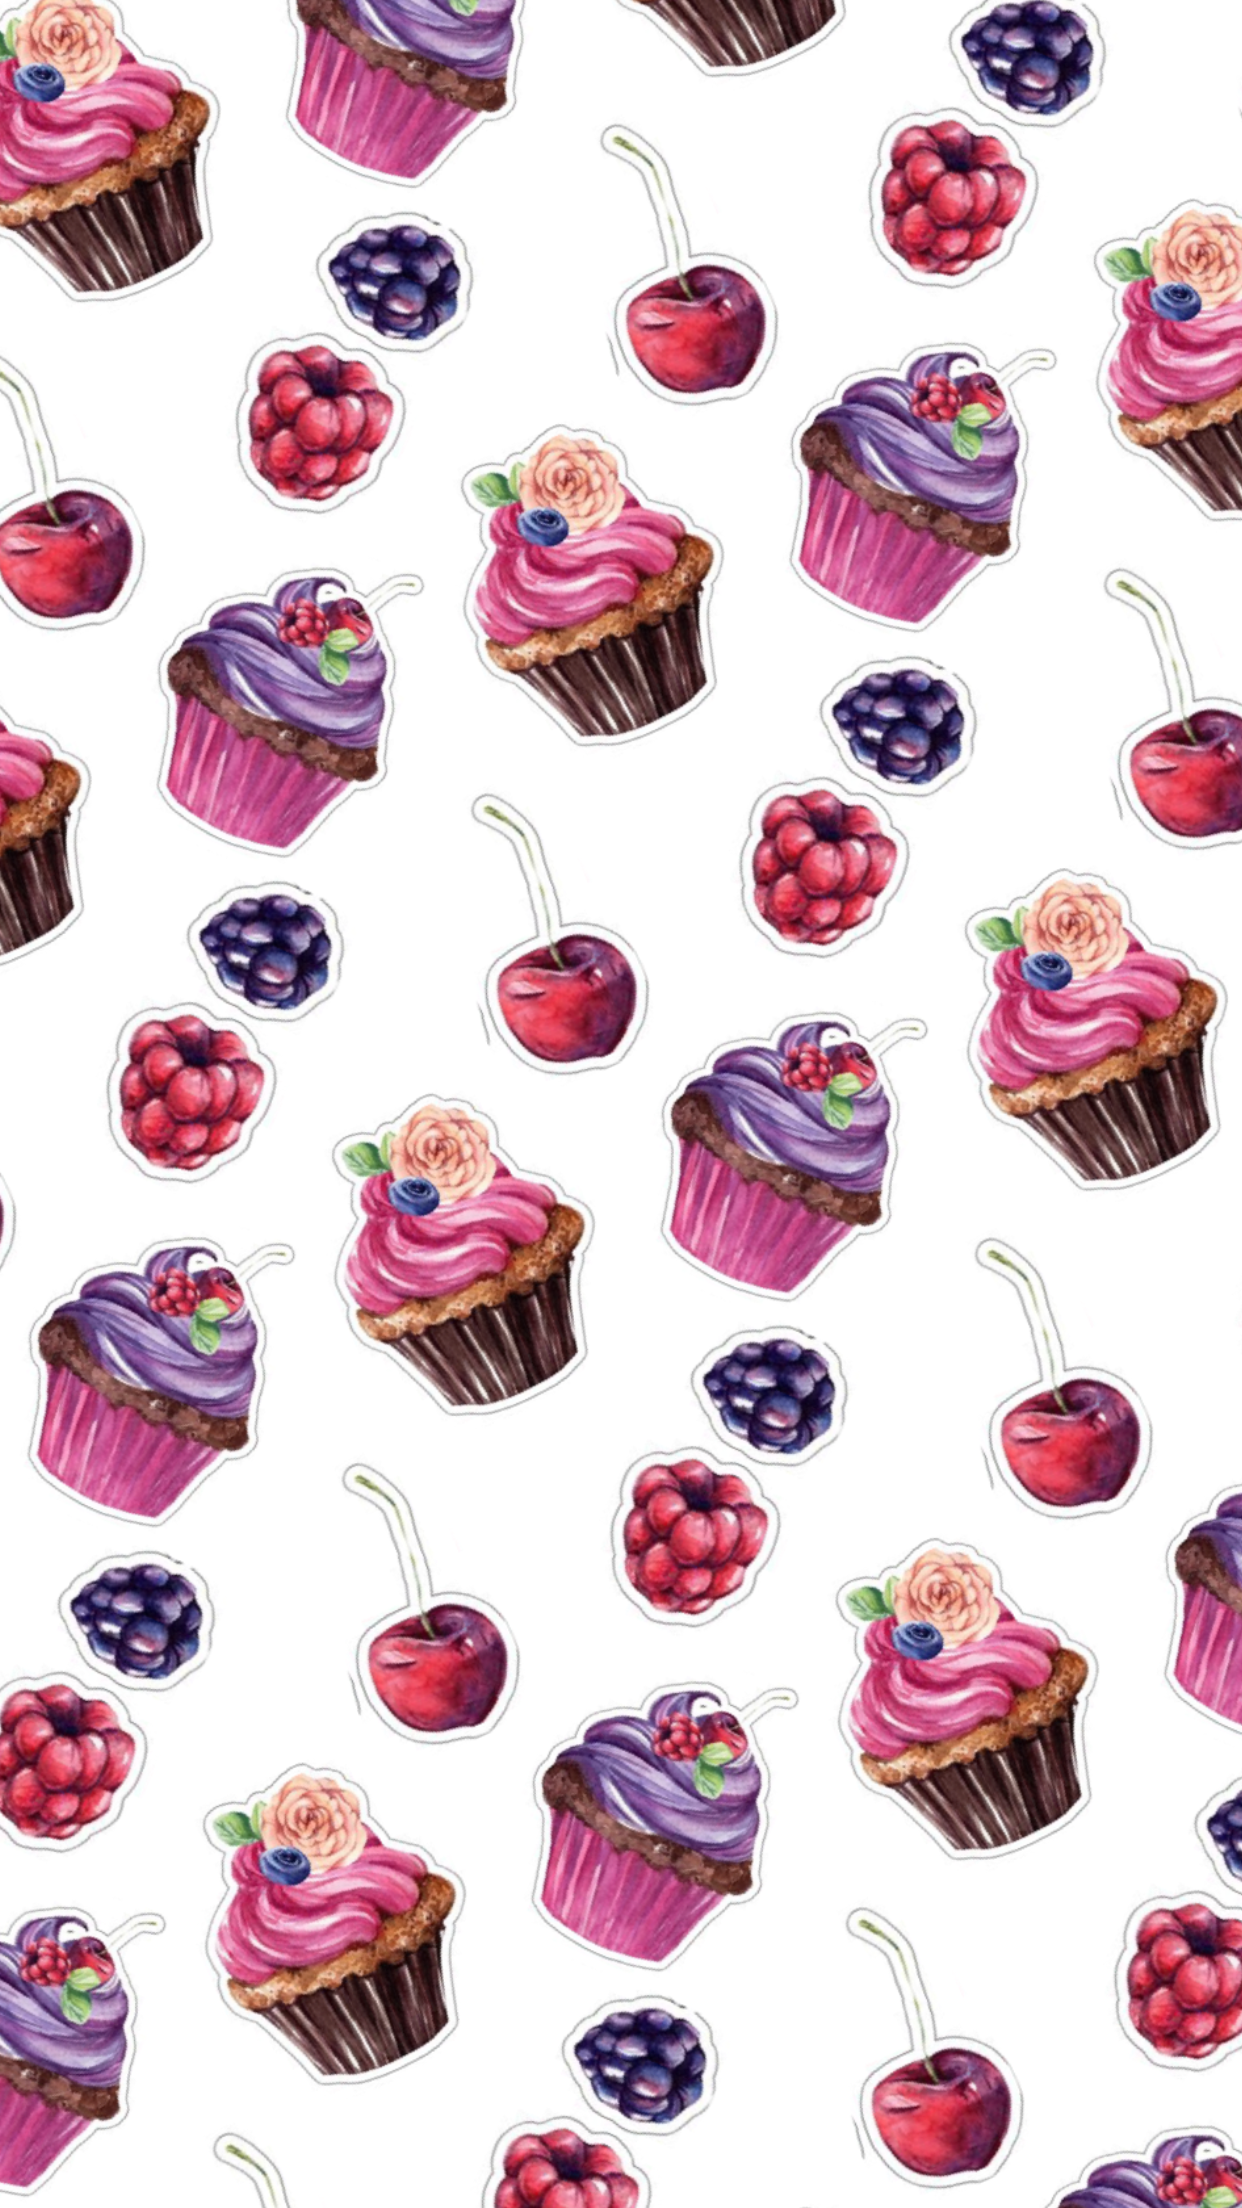 Cupcakes wallpaper, Wallpaper iphone .com